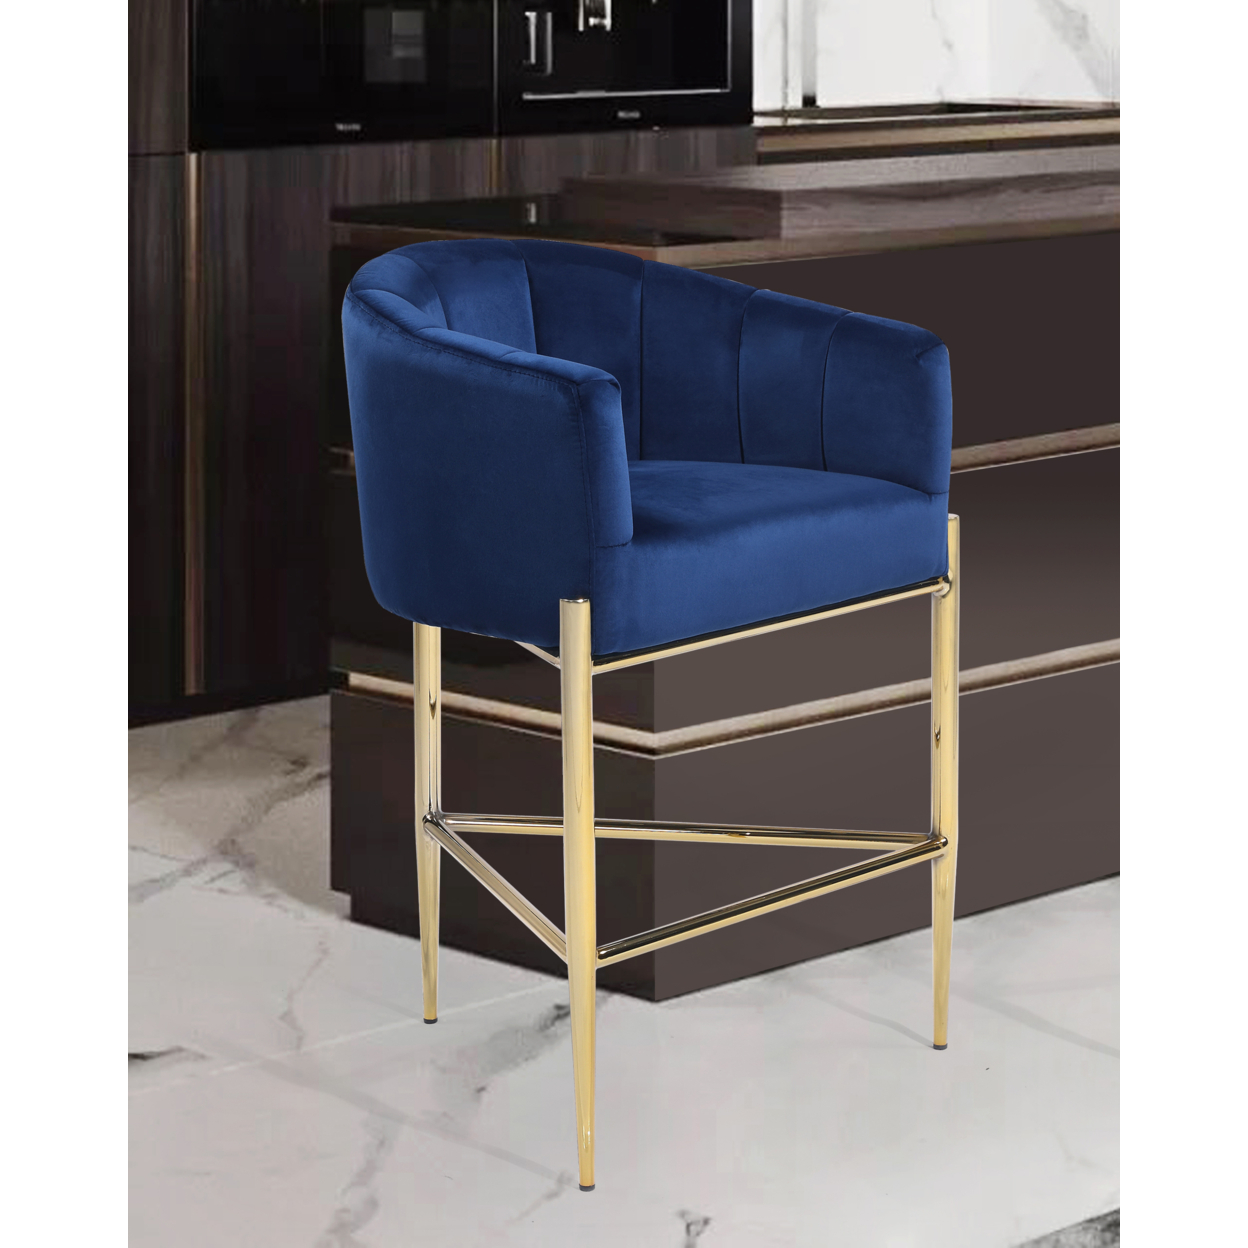 Iconic Home Ardee Counter Stool Chair Velvet Upholstered Shelter Arm Shell Design 3 Legged Gold Tone Solid Metal Base - Navy